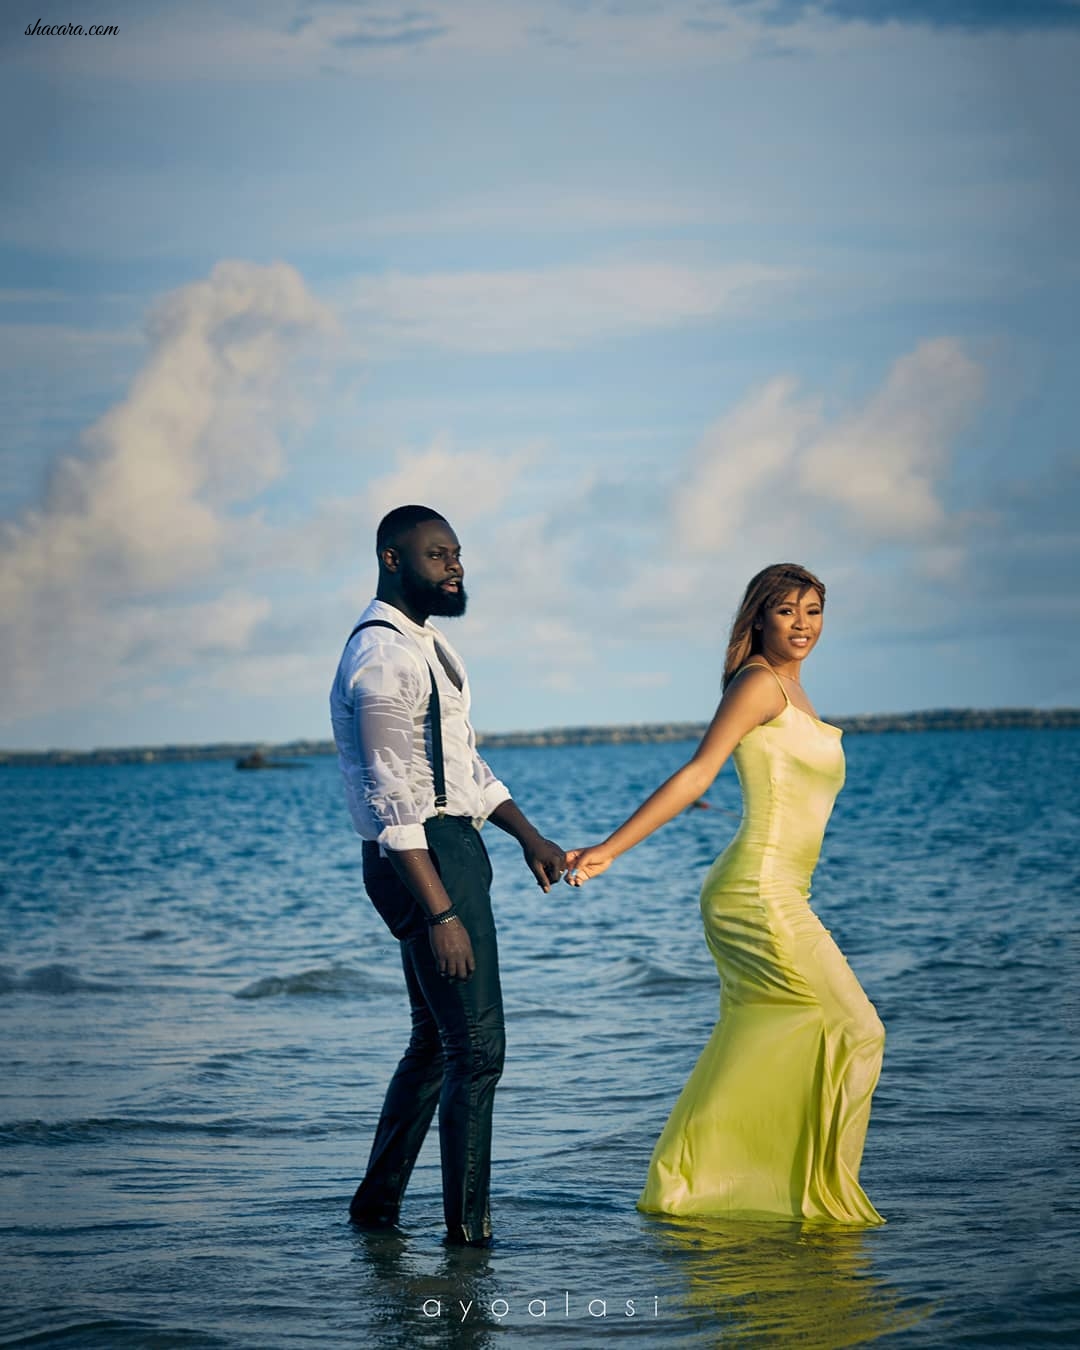 Yomi & Grace Makun Celebrate Their Wedding Anniversary: ‘3 Years Of Unbreakable Bond’